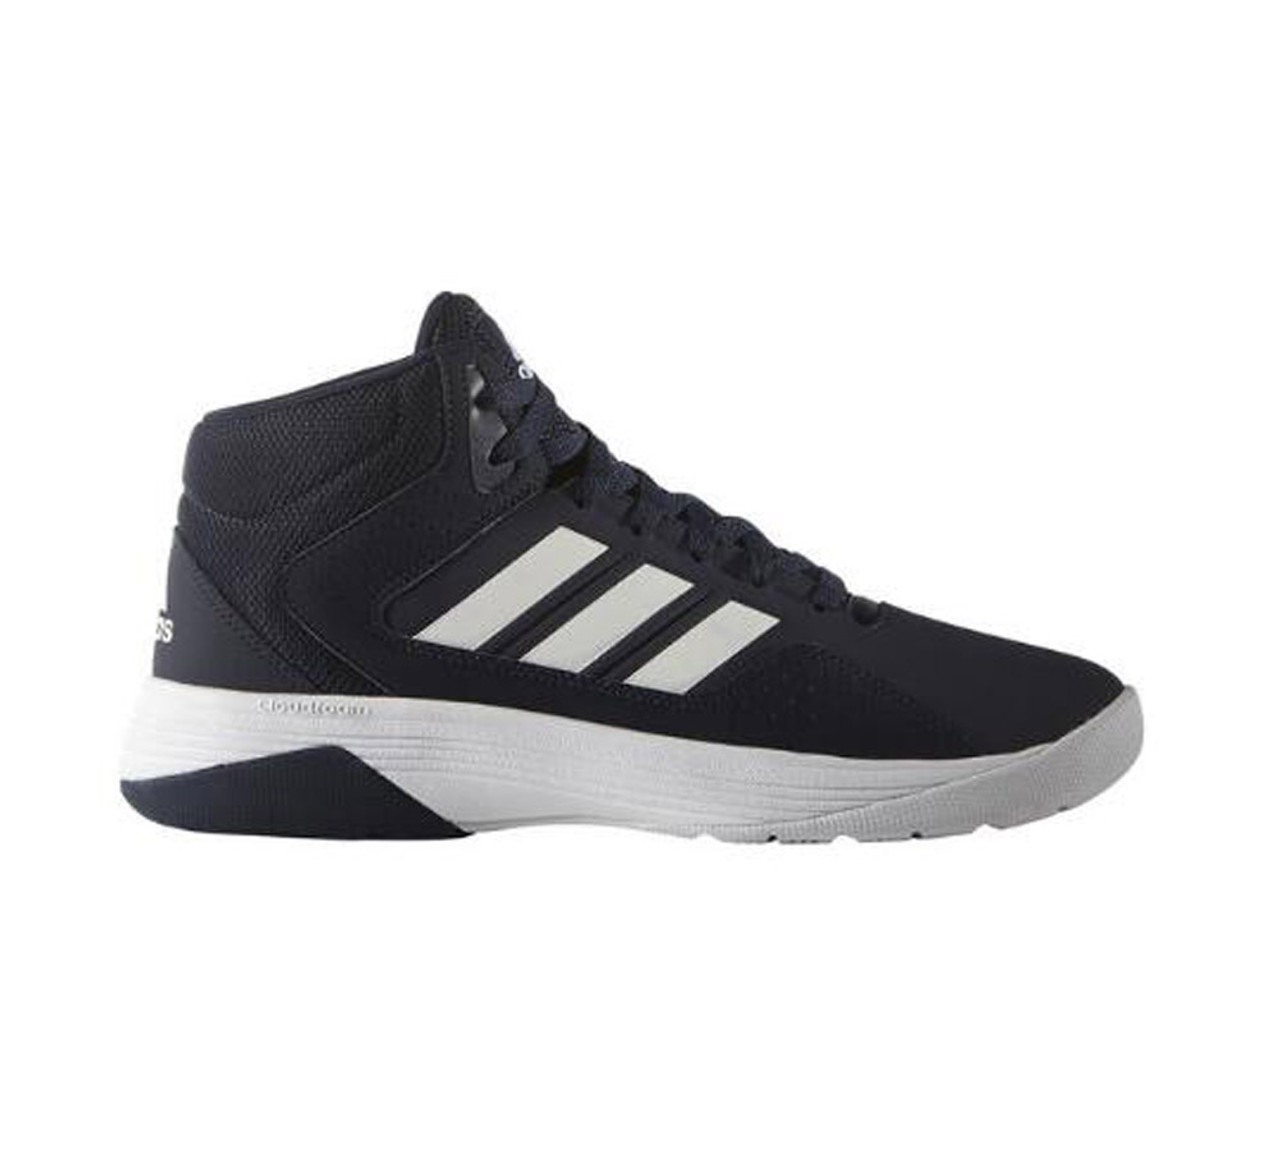 Adidas Men’s Shoes LVL 029002 White/ Black Basketball Athletic Cloud Foam  Size 6